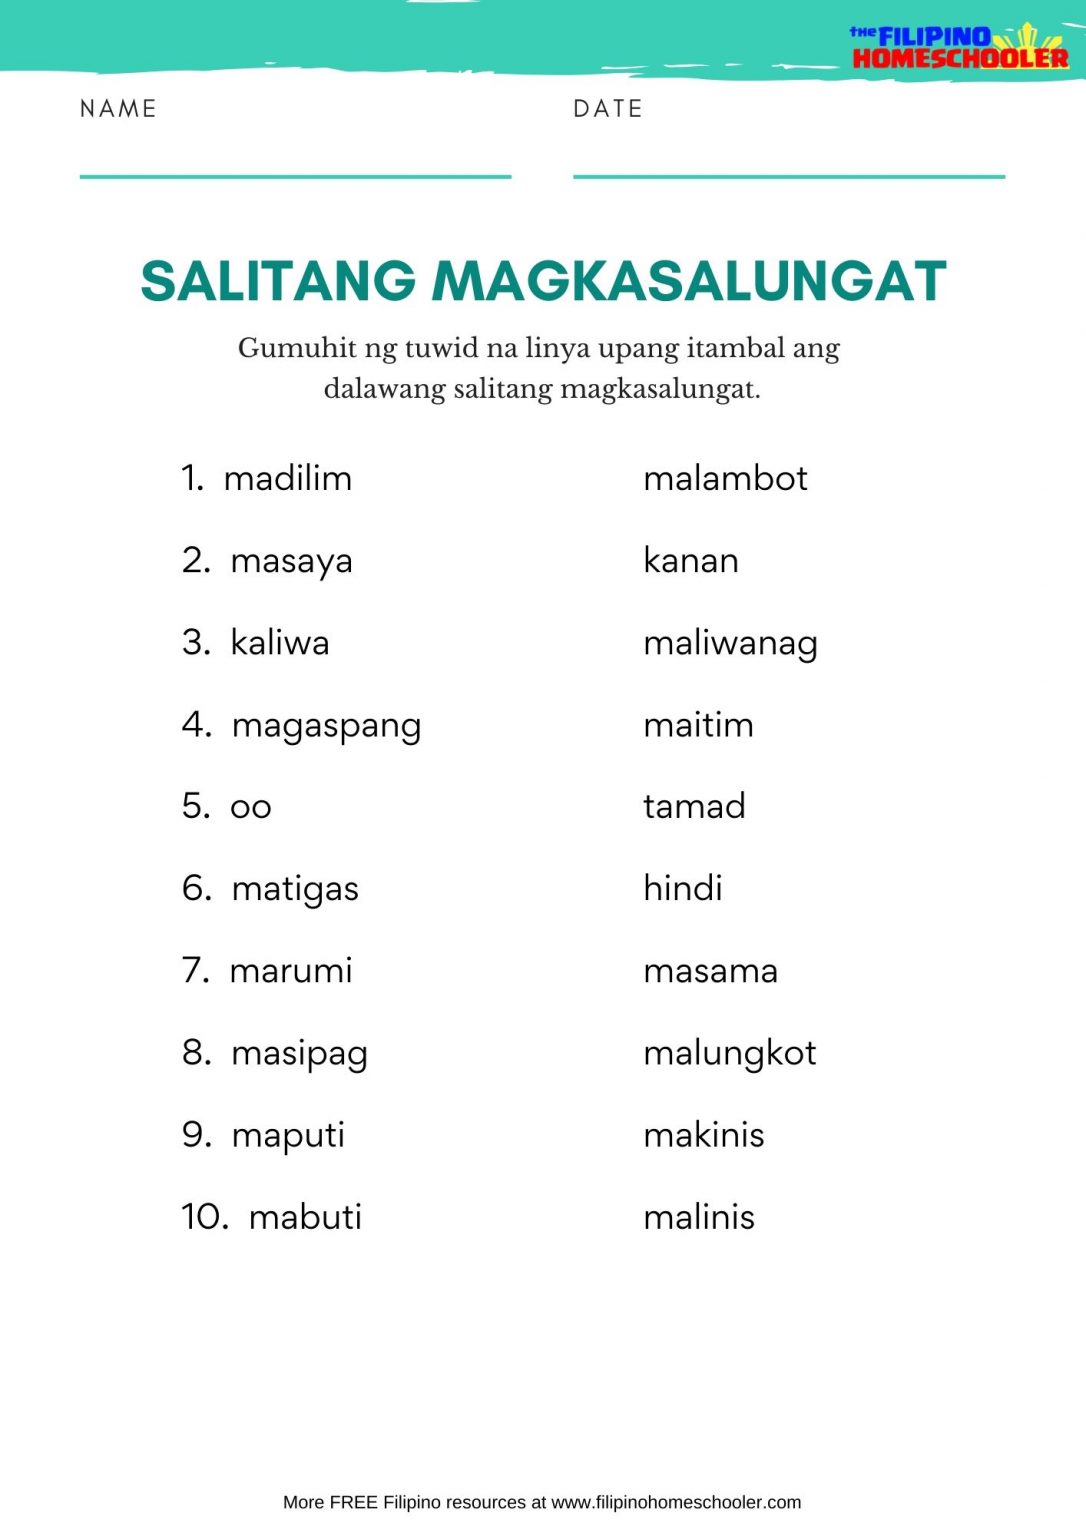 salitang-magkasalungat-worksheets-set-3-the-filipino-homeschooler